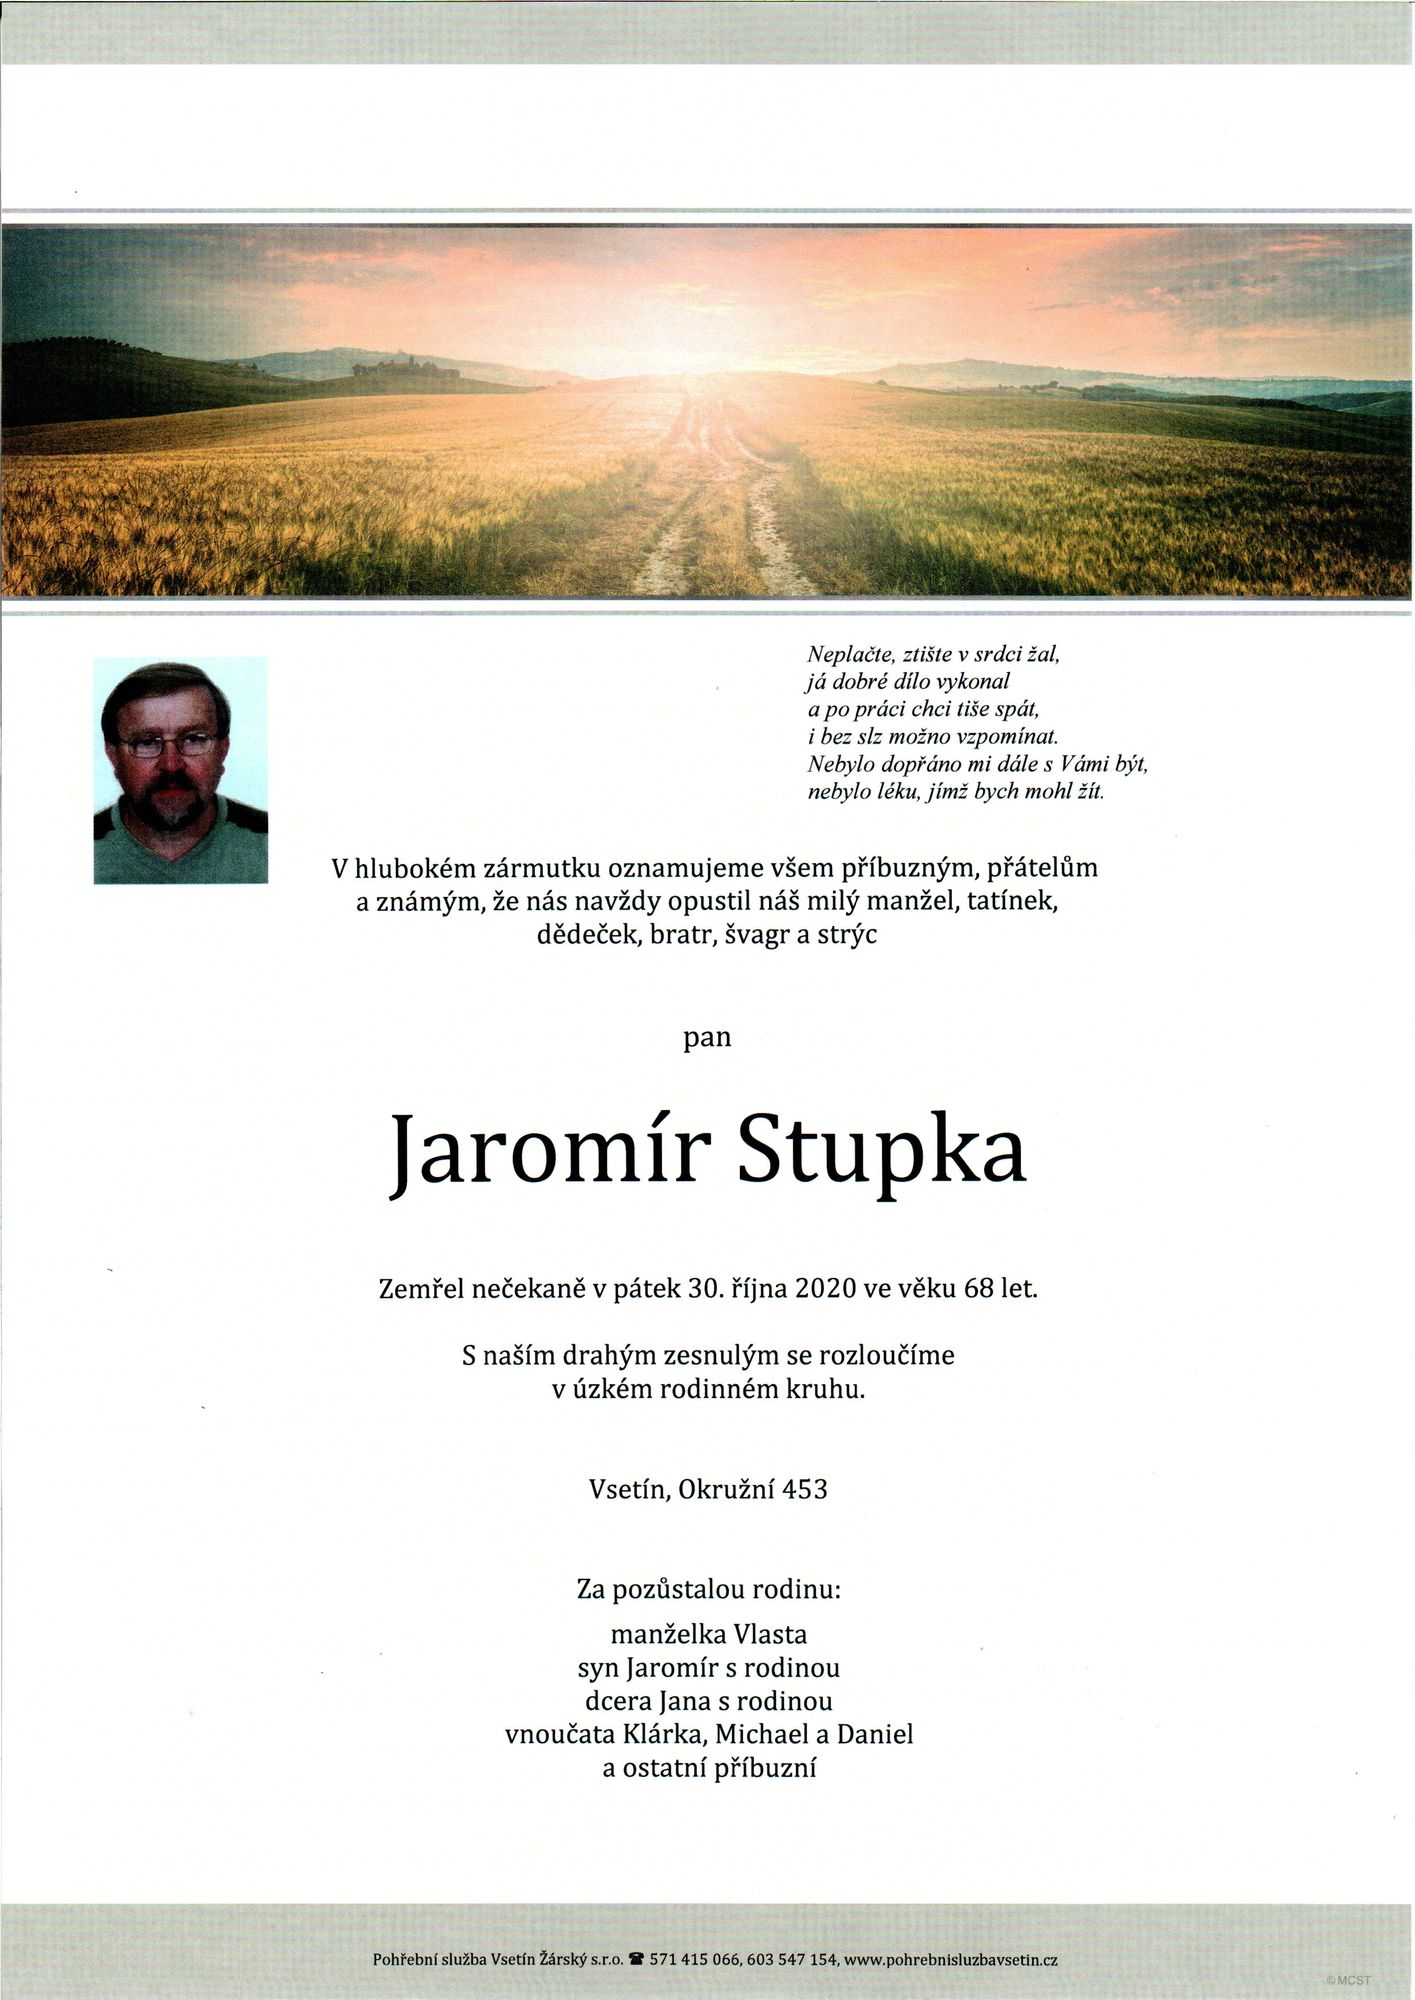 Jaromír Stupka